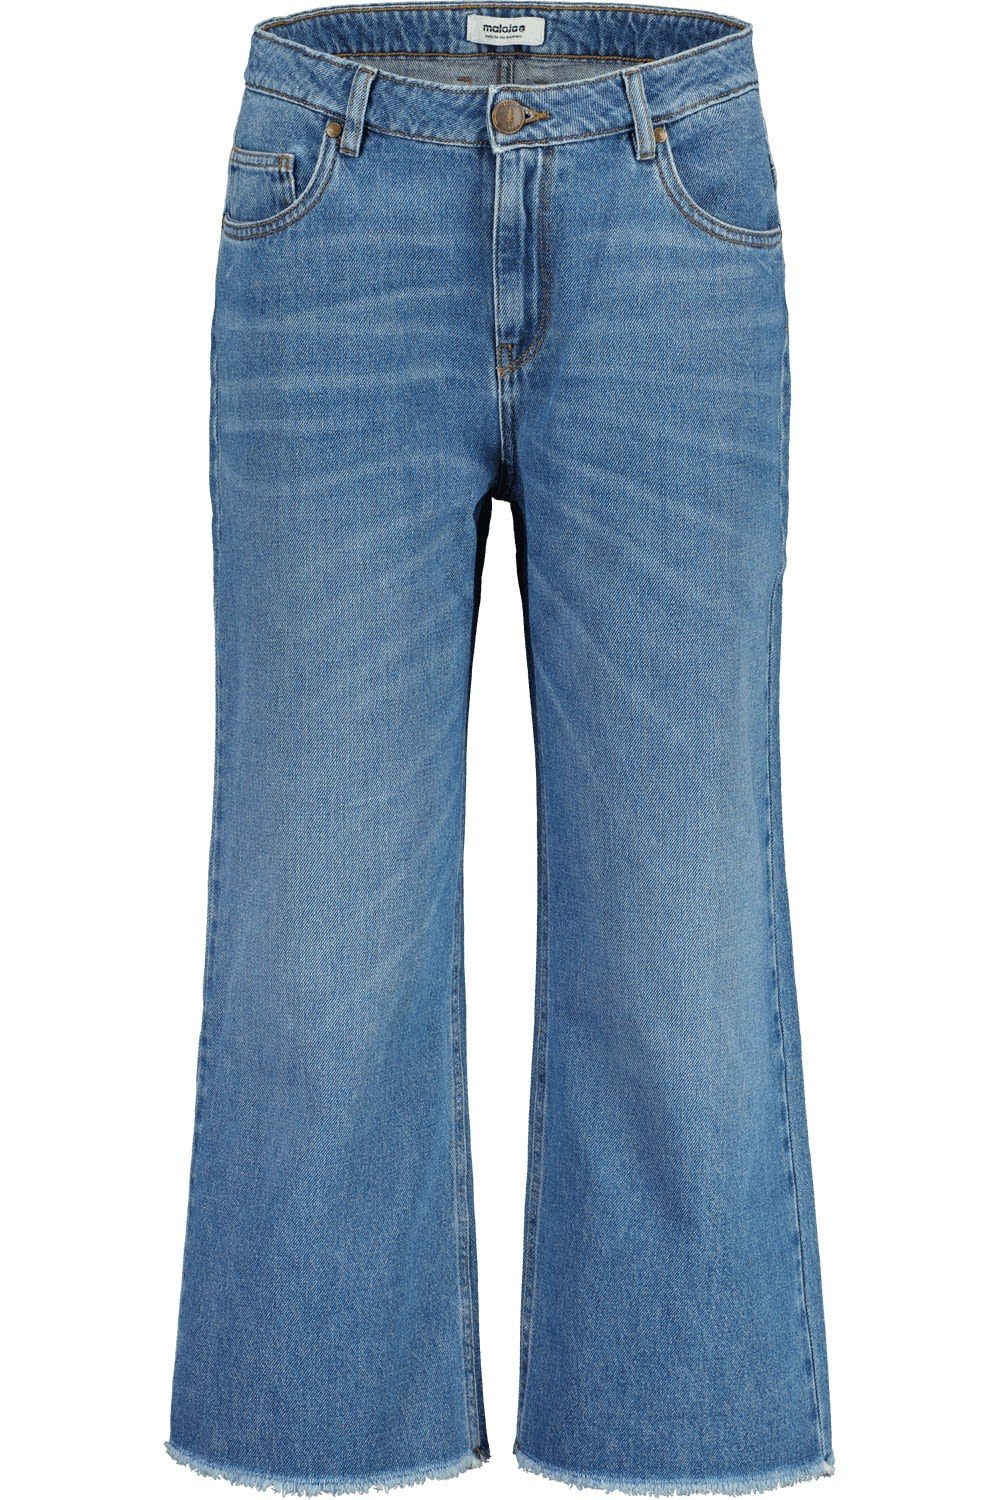 Maloja Outdoorhose Tisensm. (vorgängermodell) Maloja Culotte W Jeans